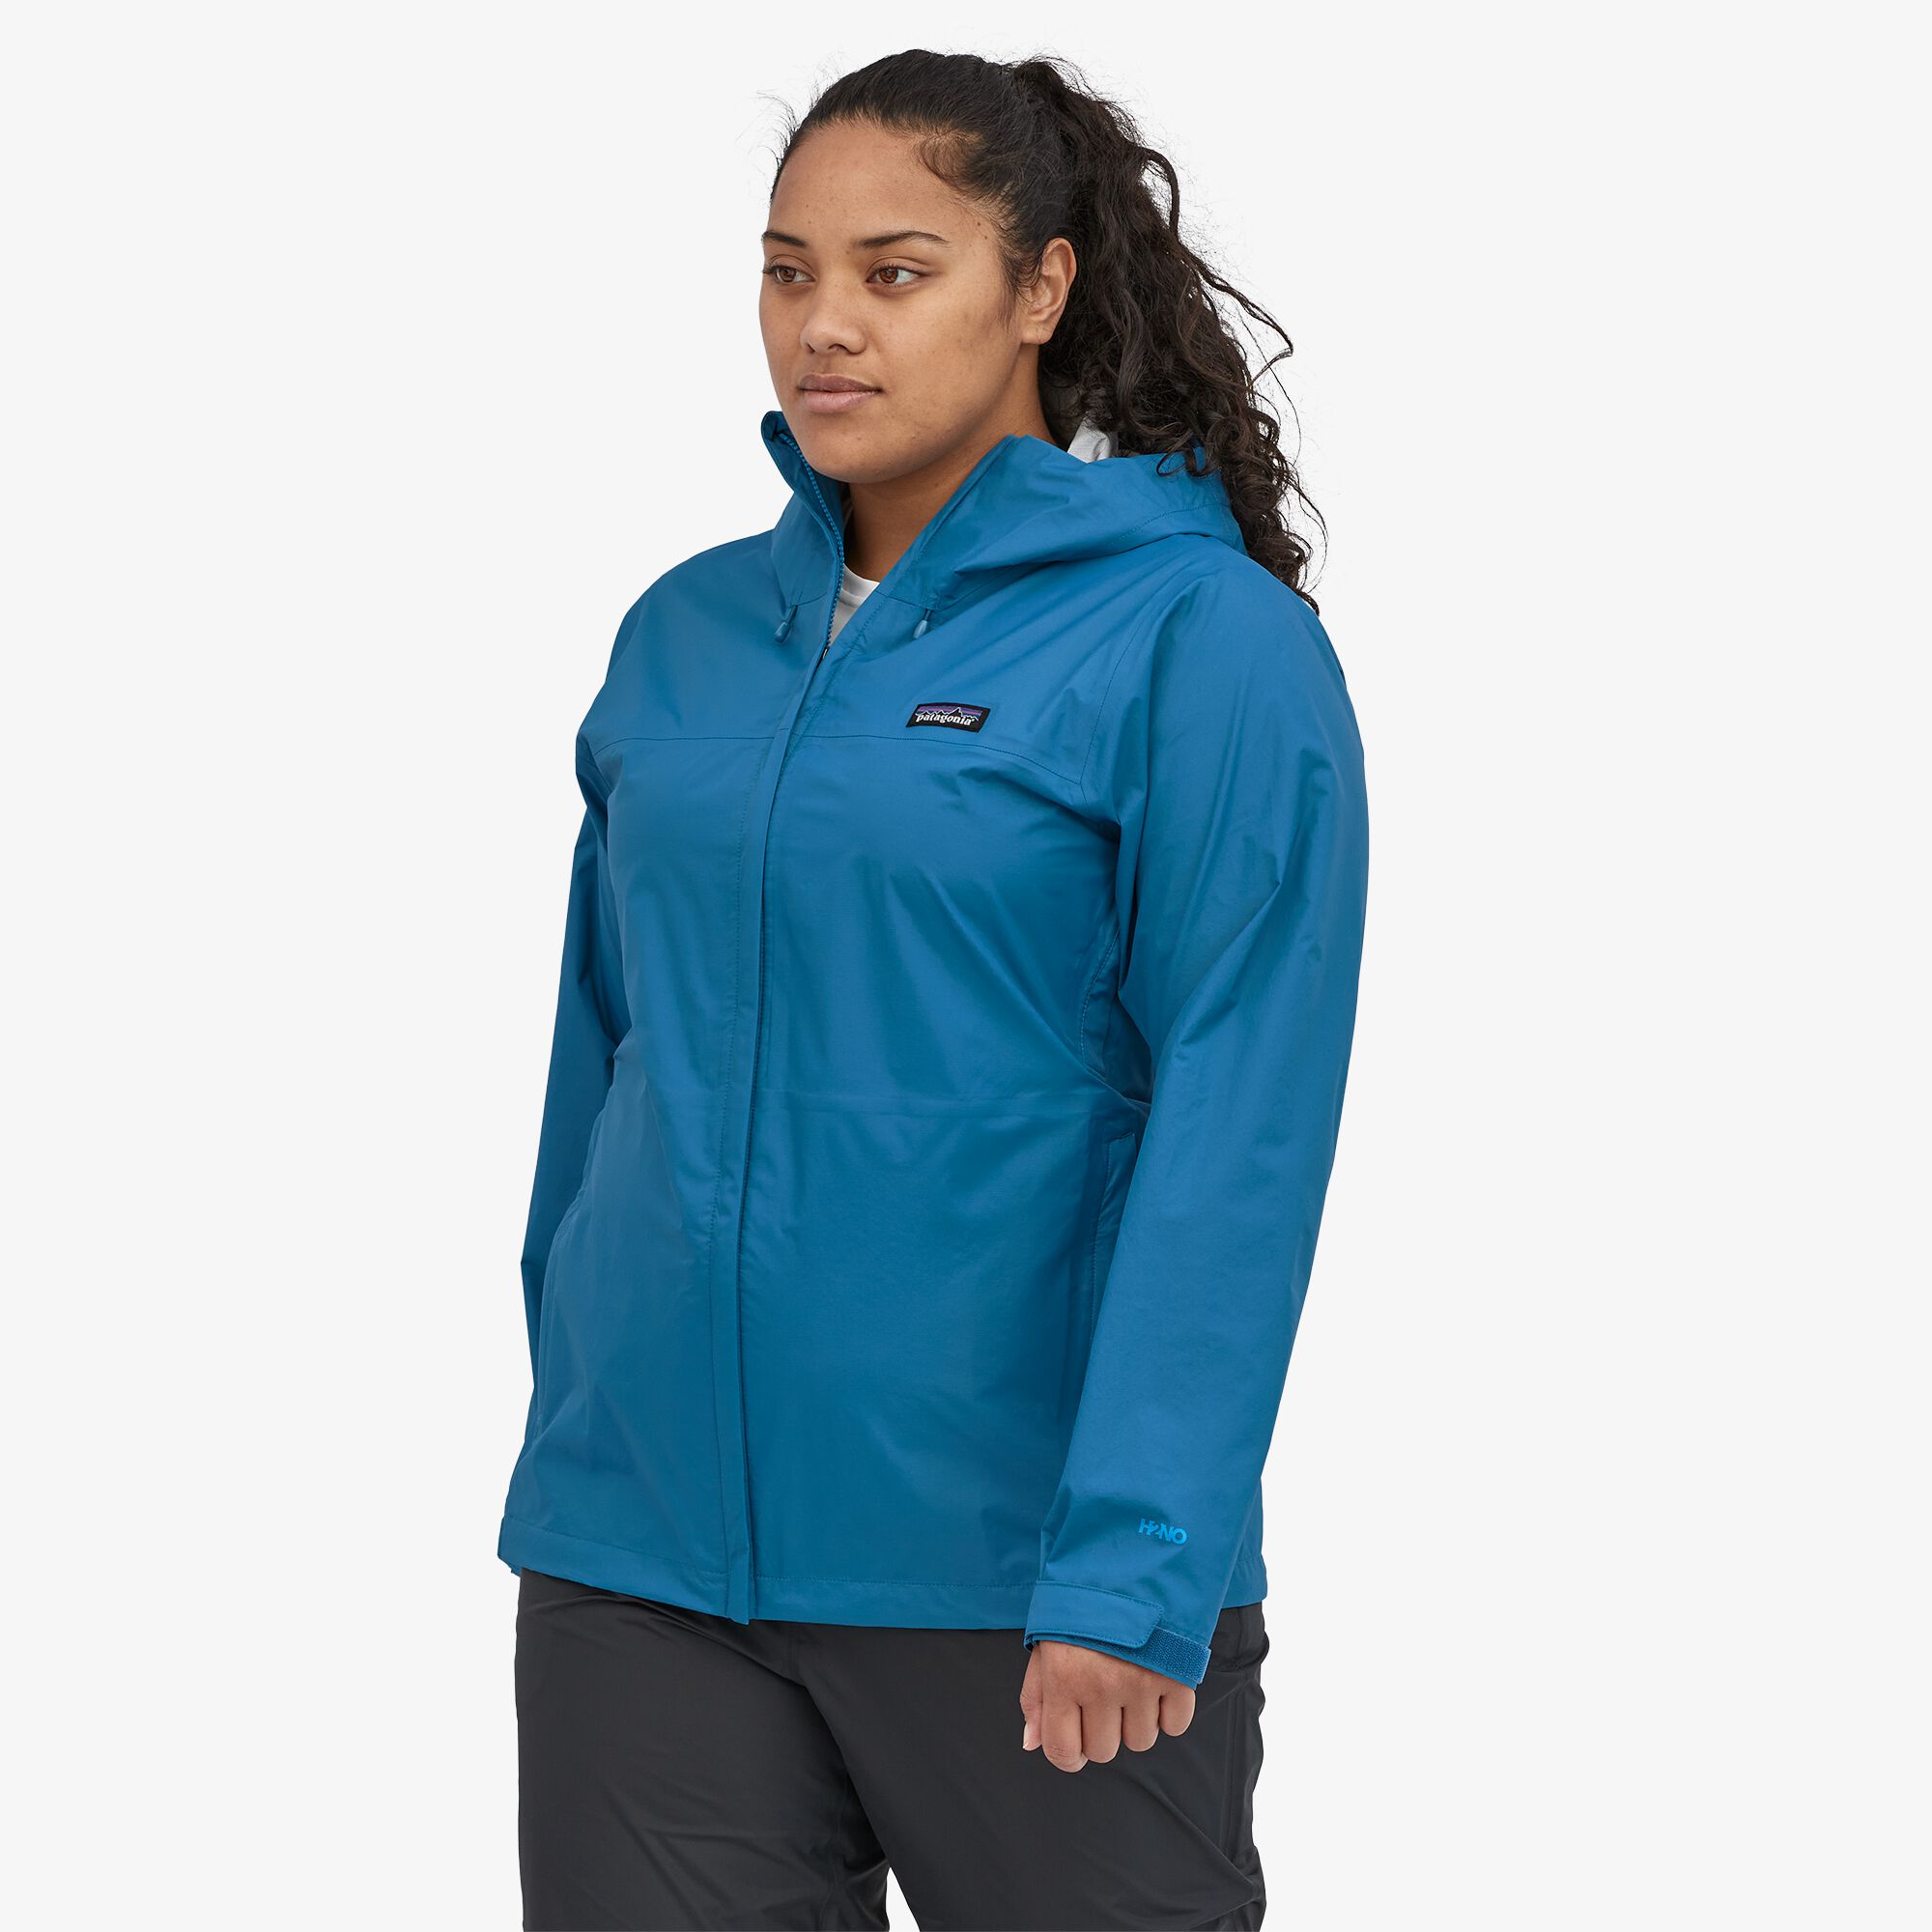 Patagonia Women's Torrentshell 3L Rain Jacket